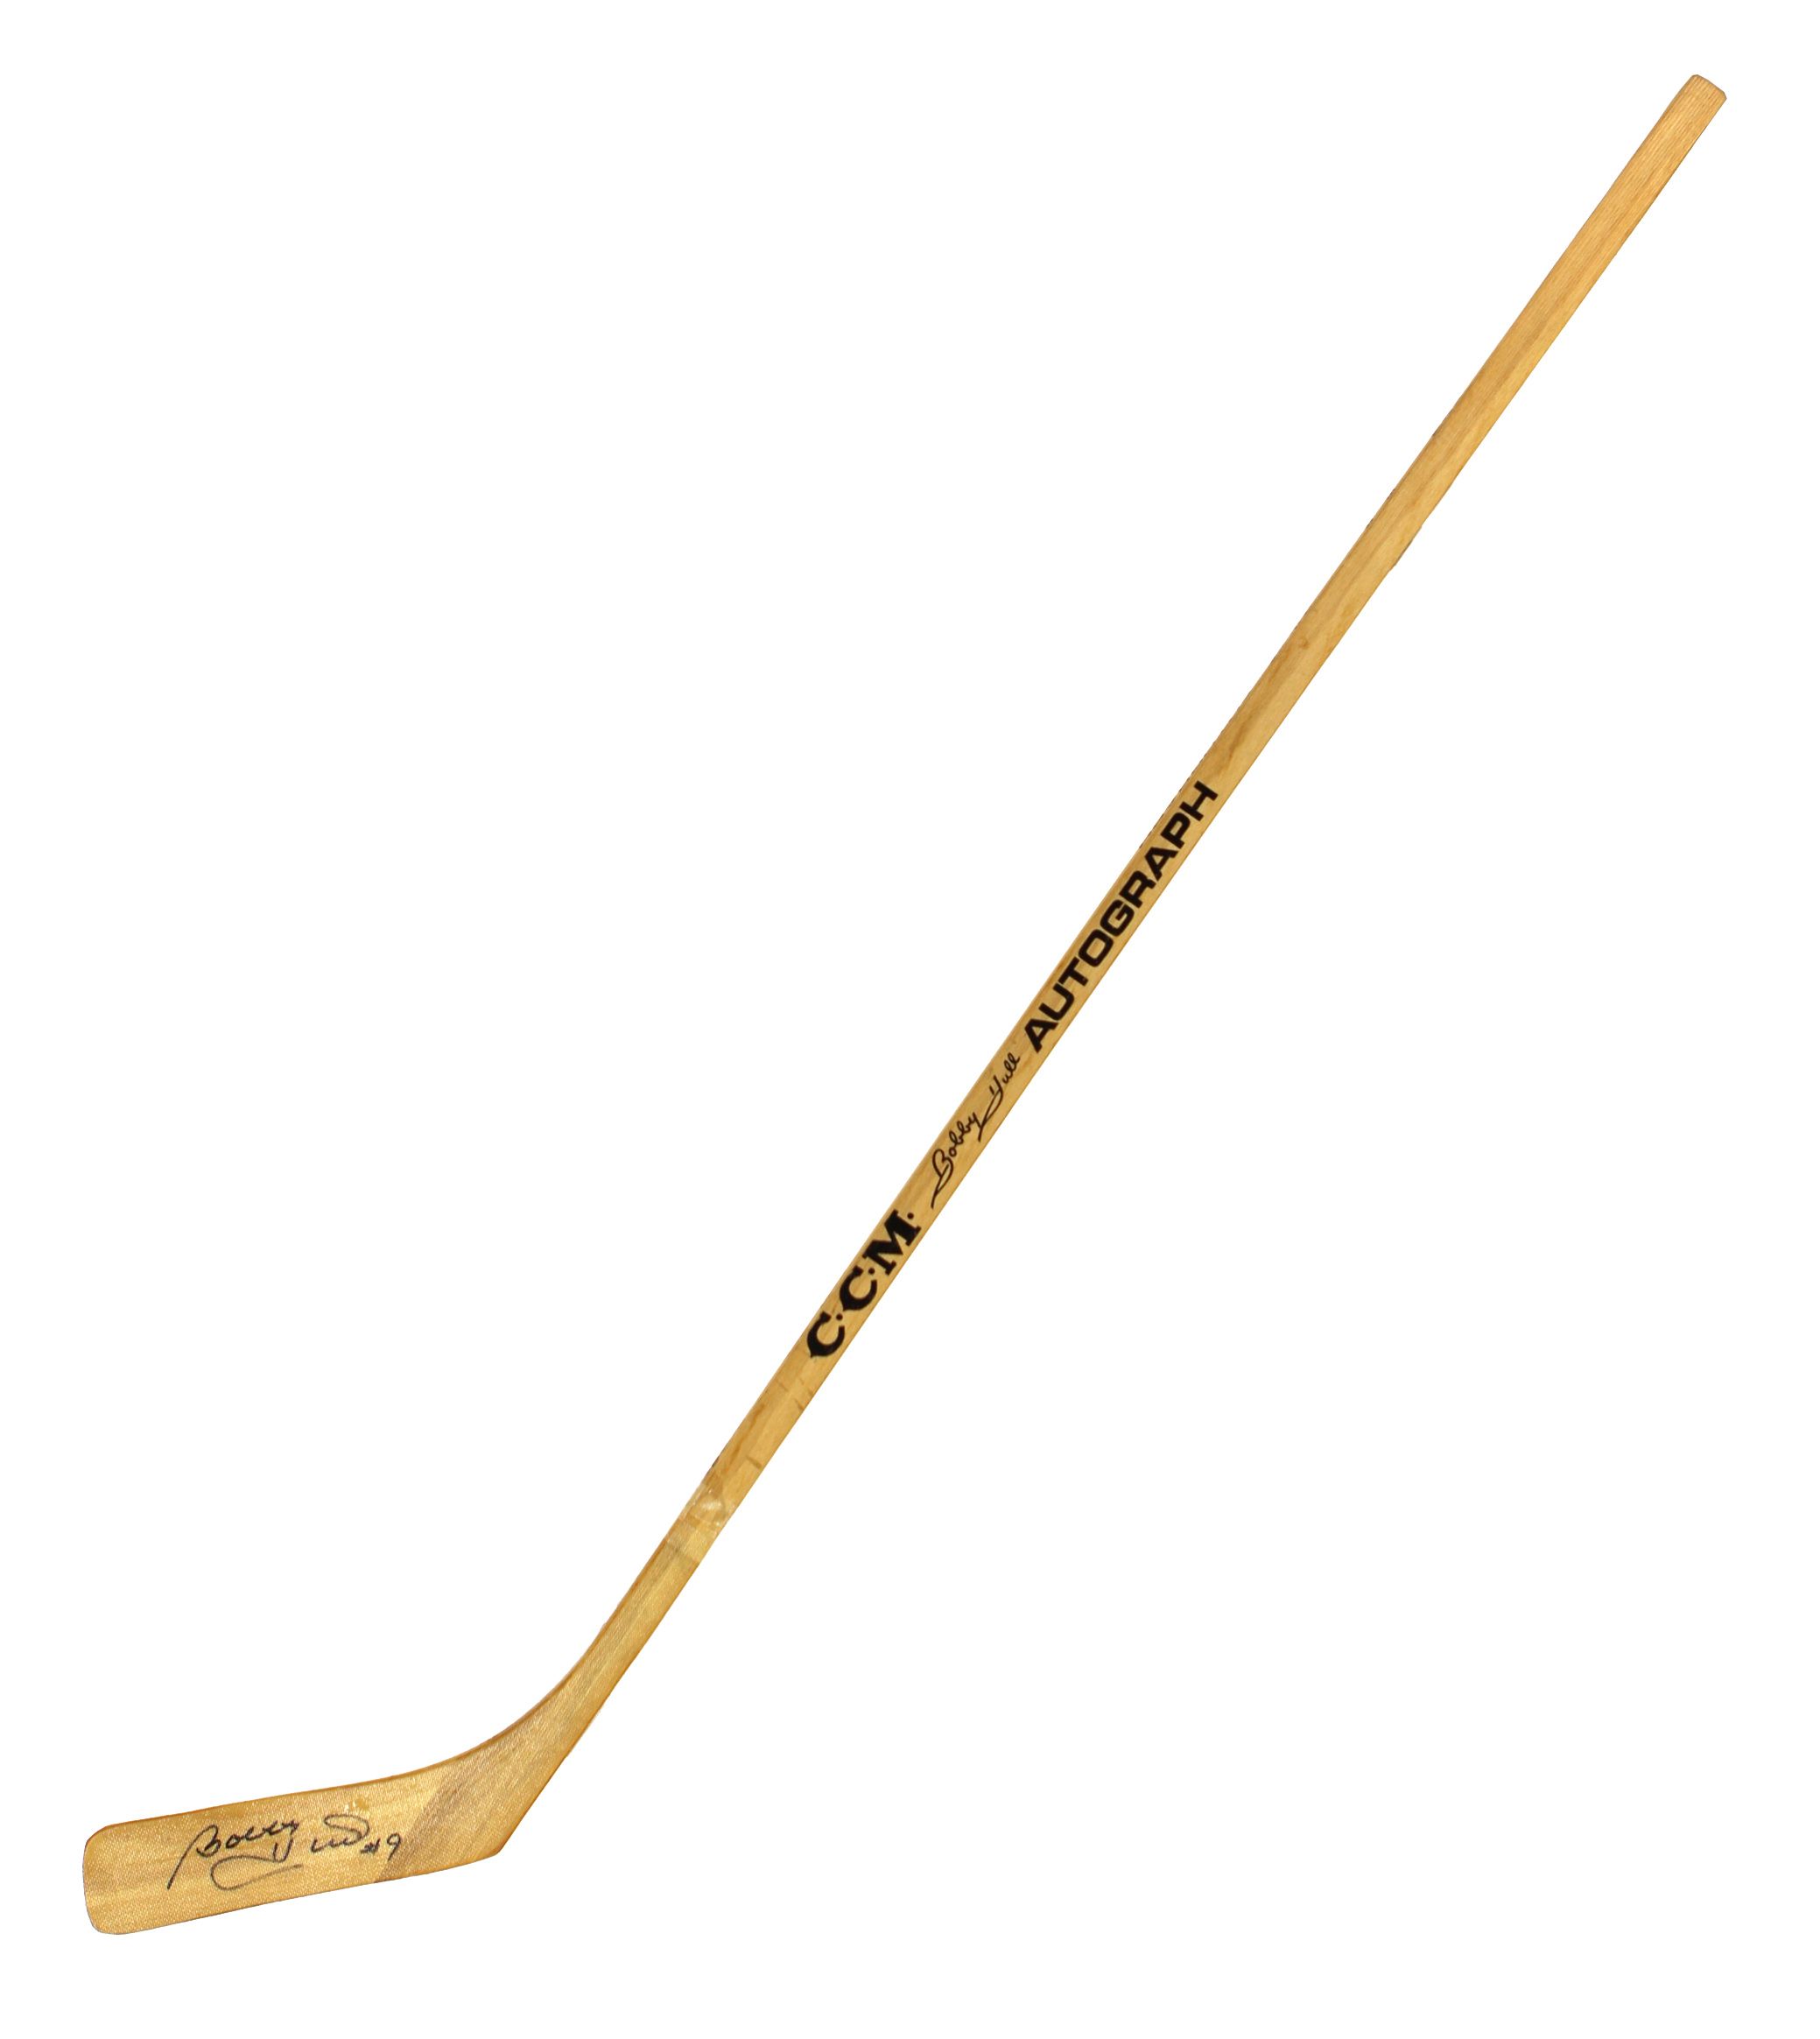 Sold at Auction: Bobby Hull Hockey